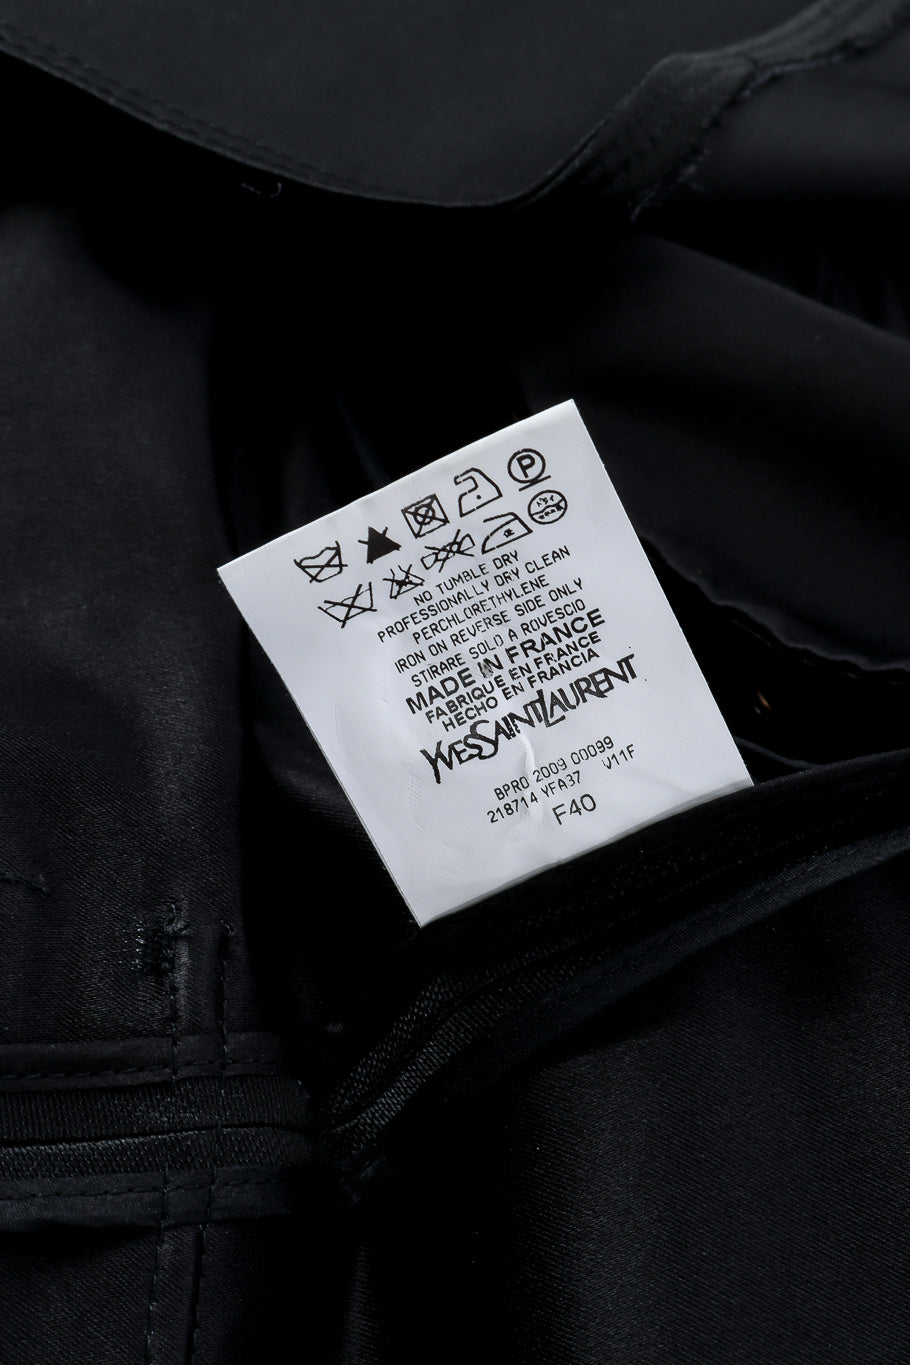 Grommet jacket by Yves Saint Laurent care tag  @recessla